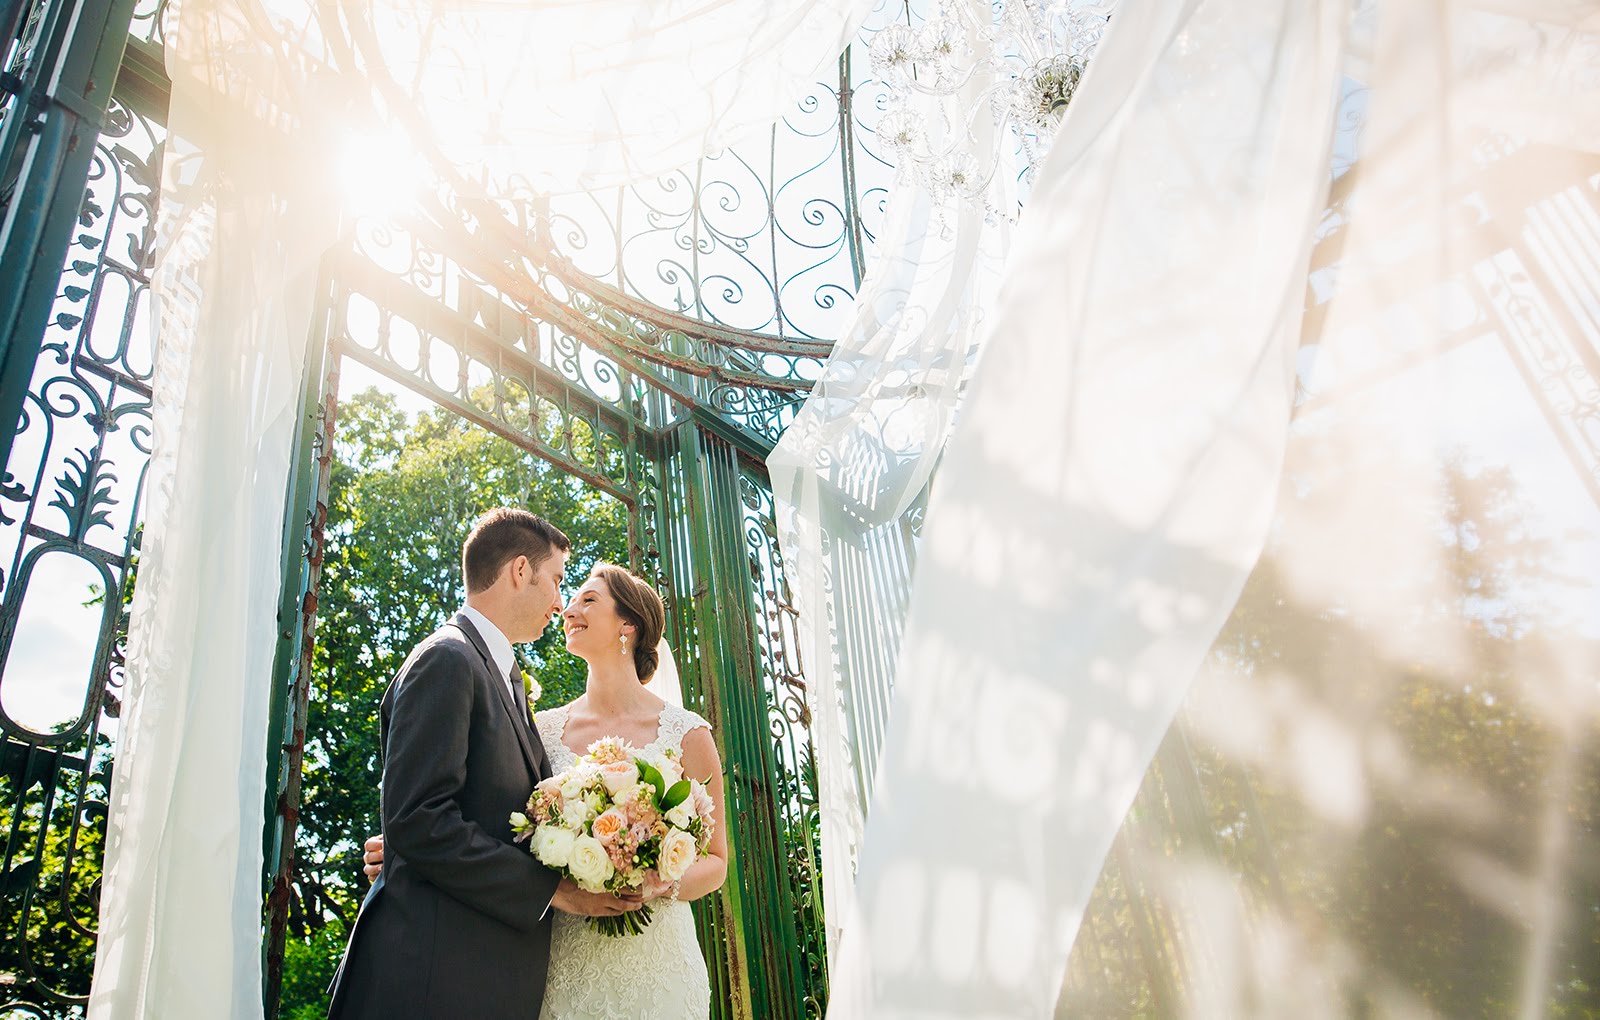 Elegant Secret Garden Wedding at The Inn at Barley Sheaf Farm by Sebesta Design. Photography by Juliana Laury Photography